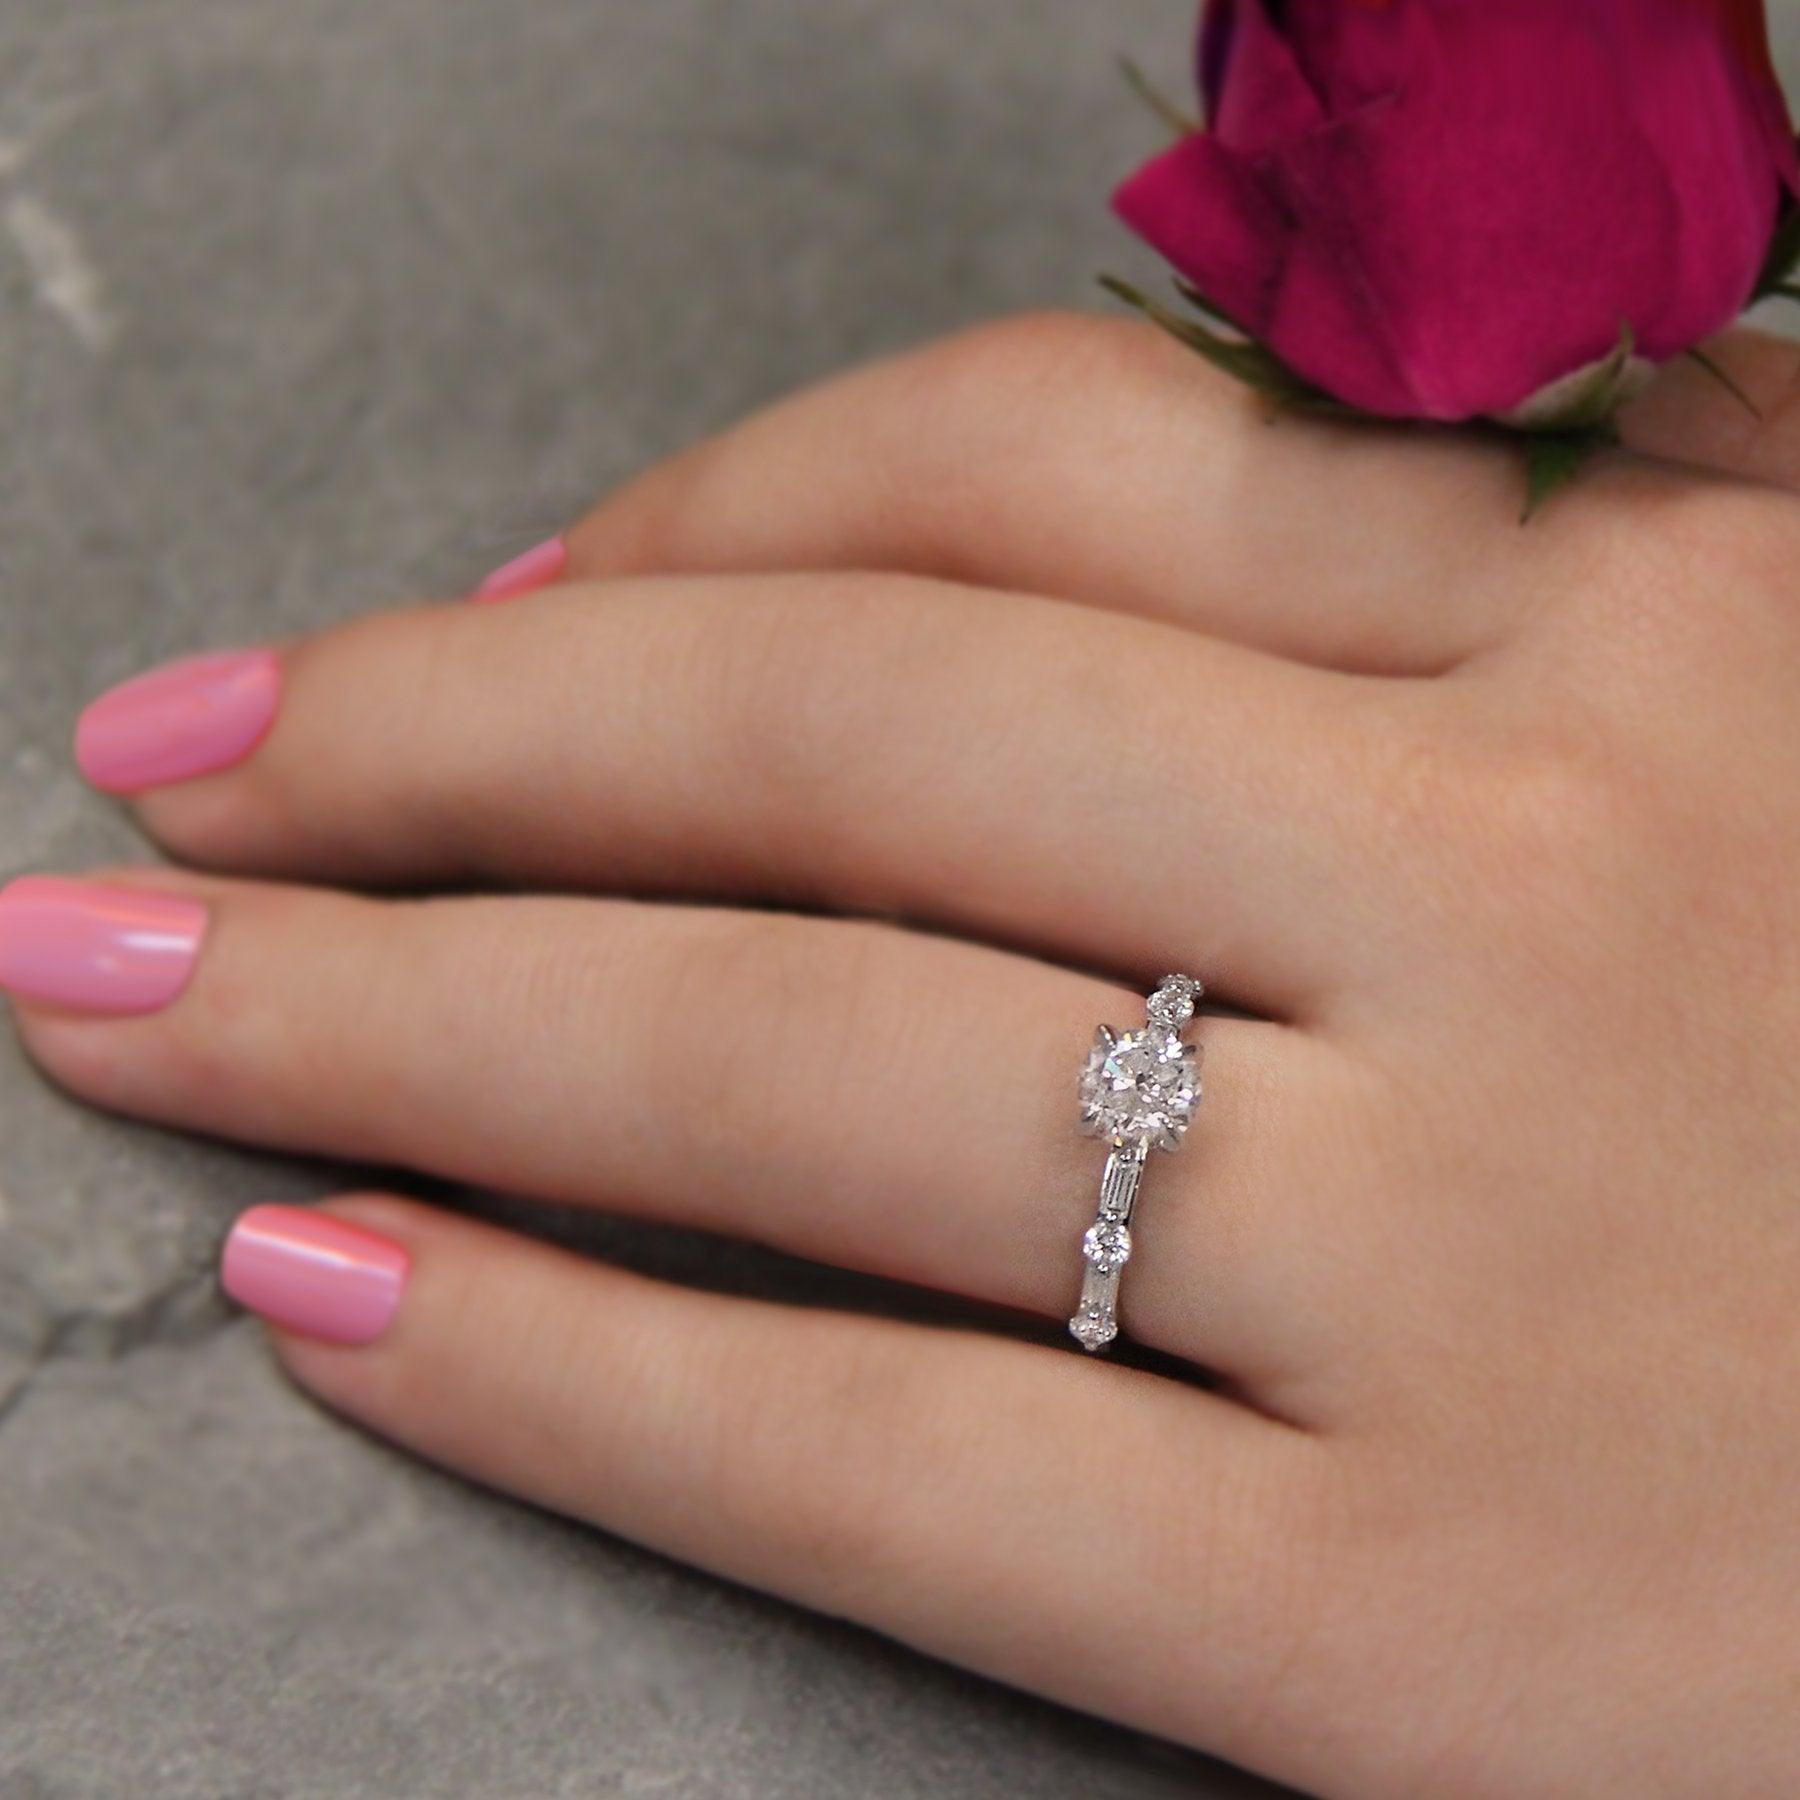 BW JAMES Engagement Rings "The Tokyo" Classic Semi-Mount Diamond Ring